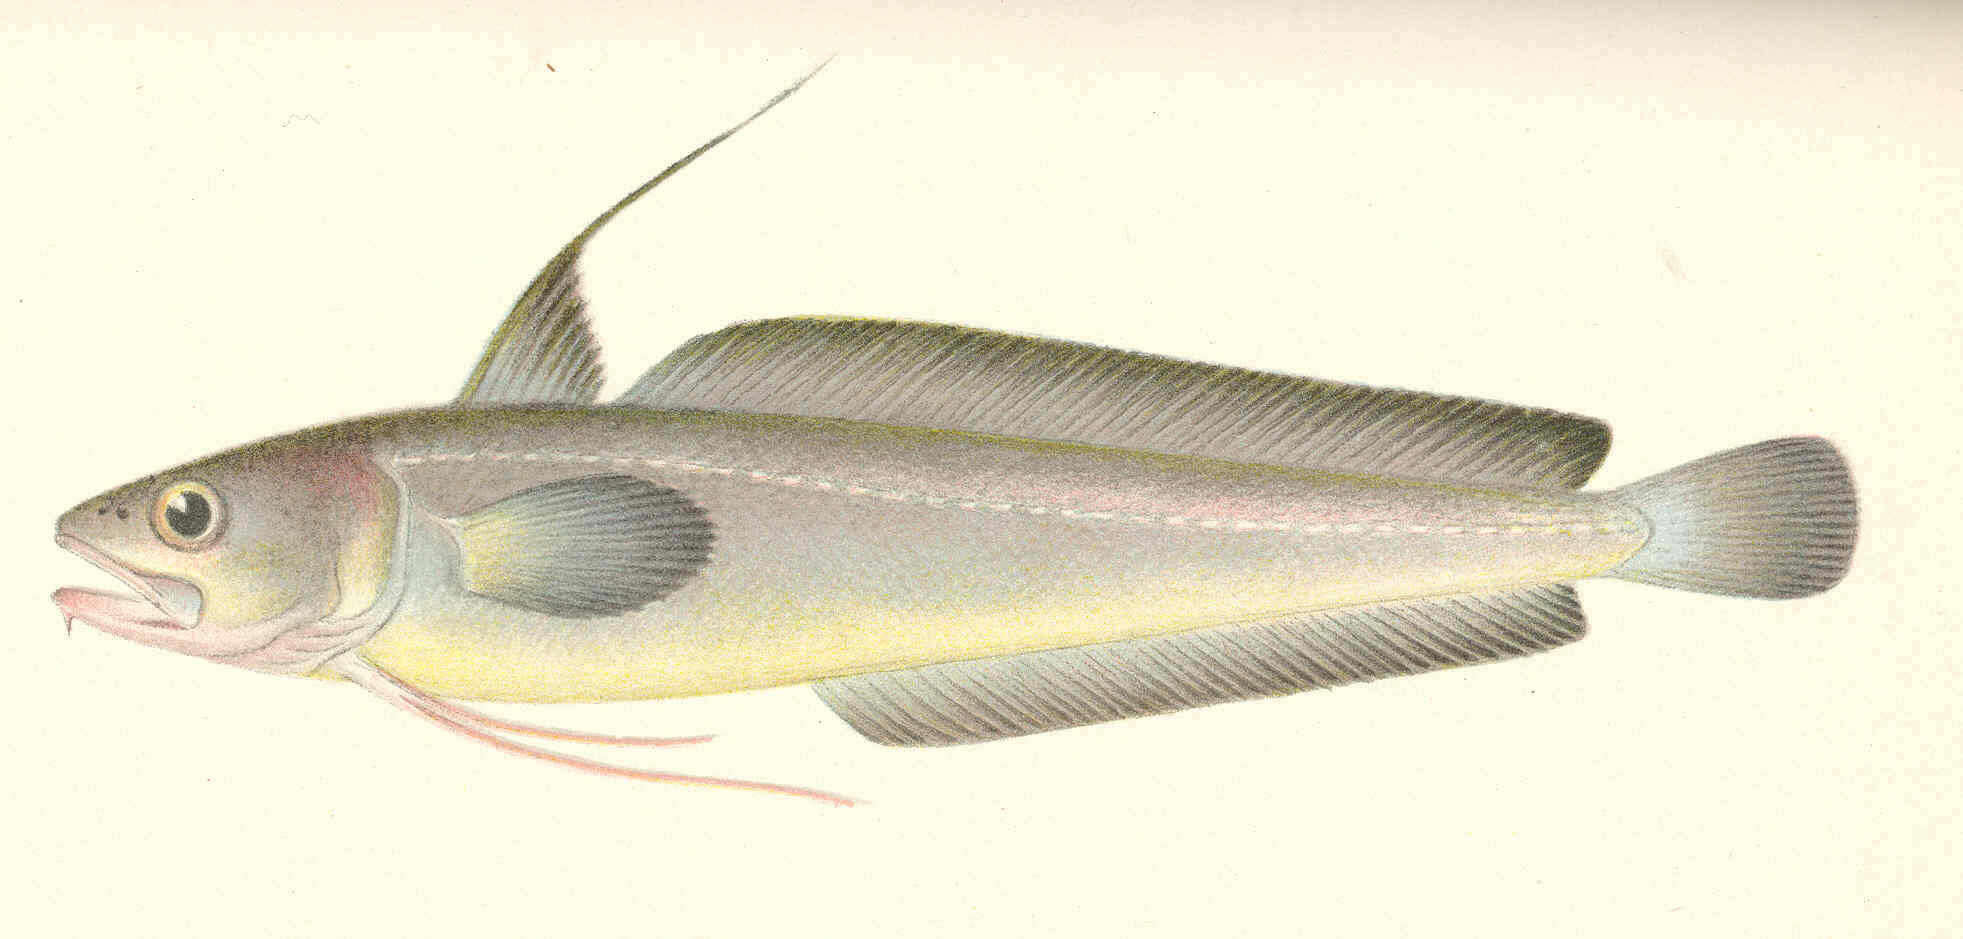 Image of Urophycis